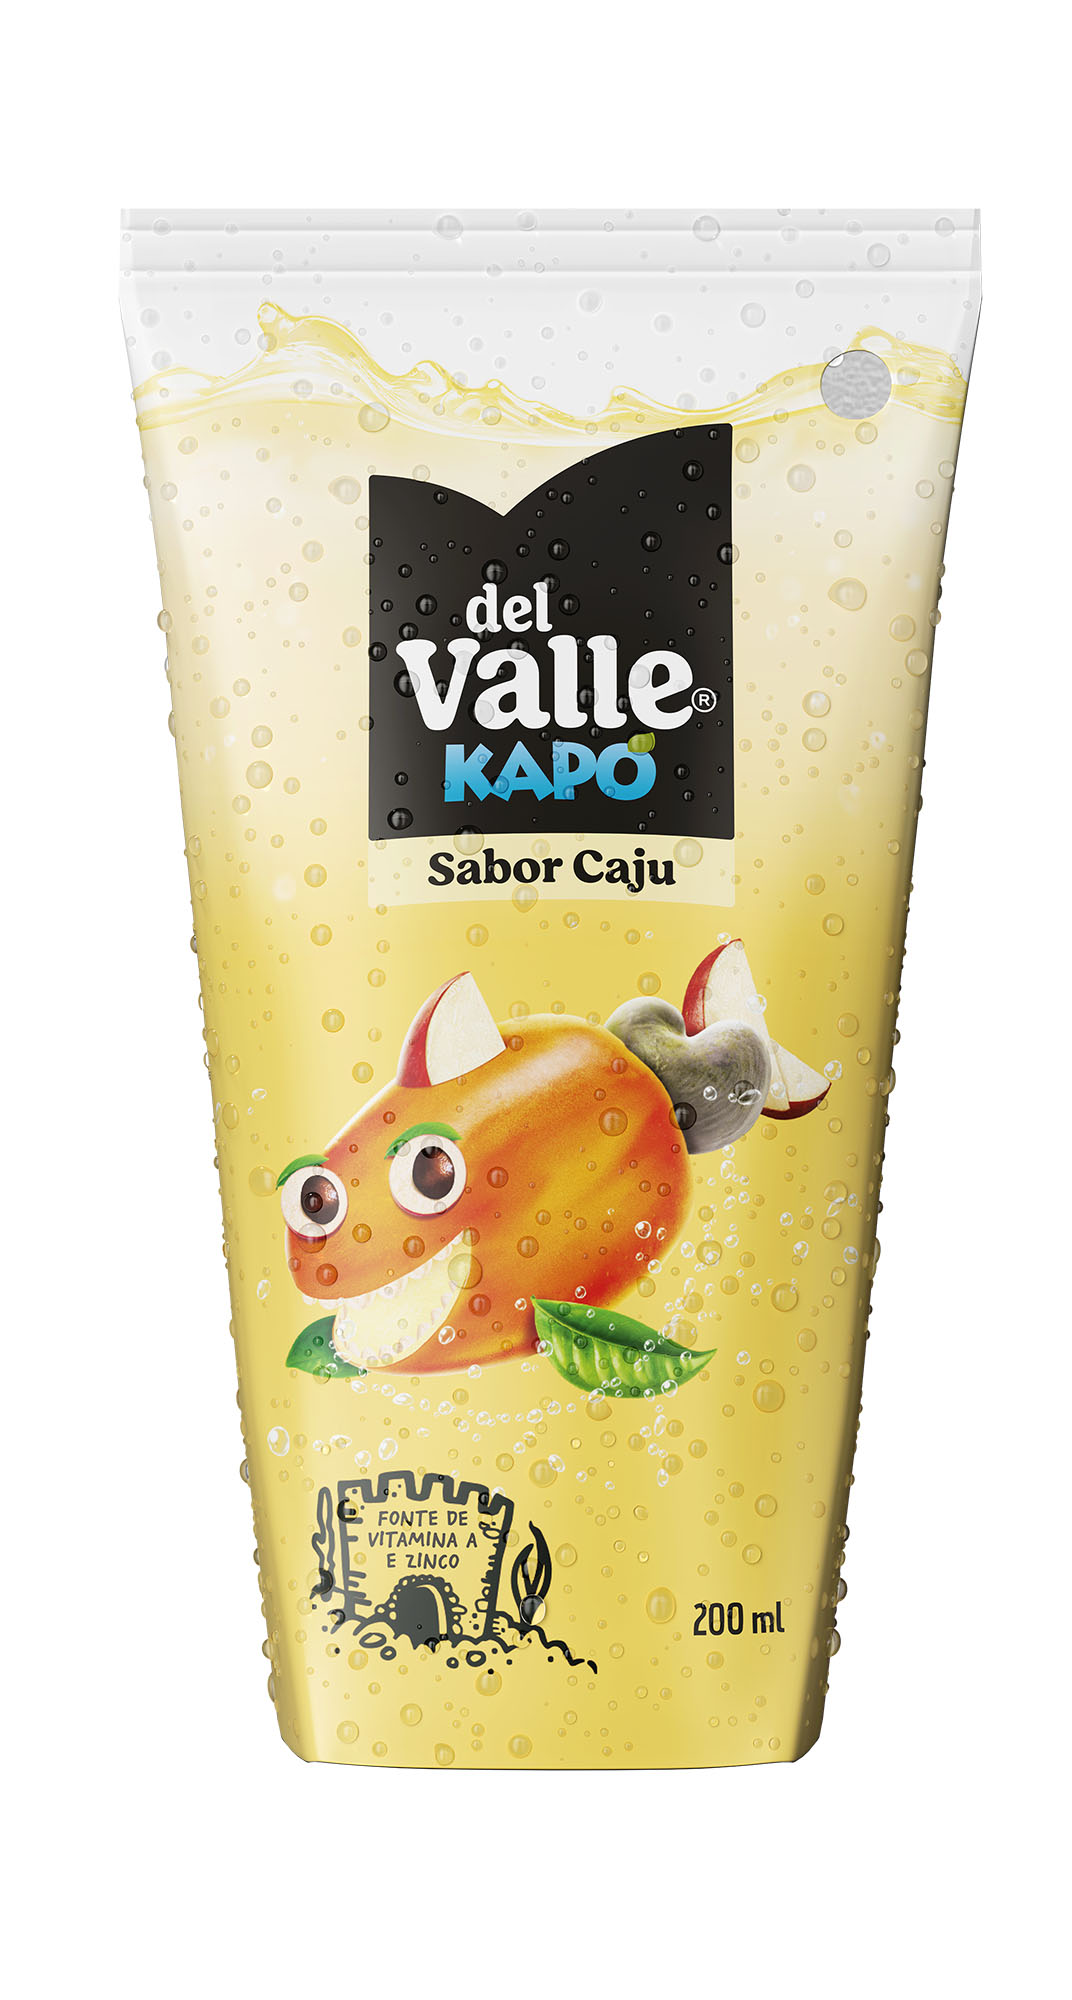 Uma embalagem de Del Valle Kapo Caju